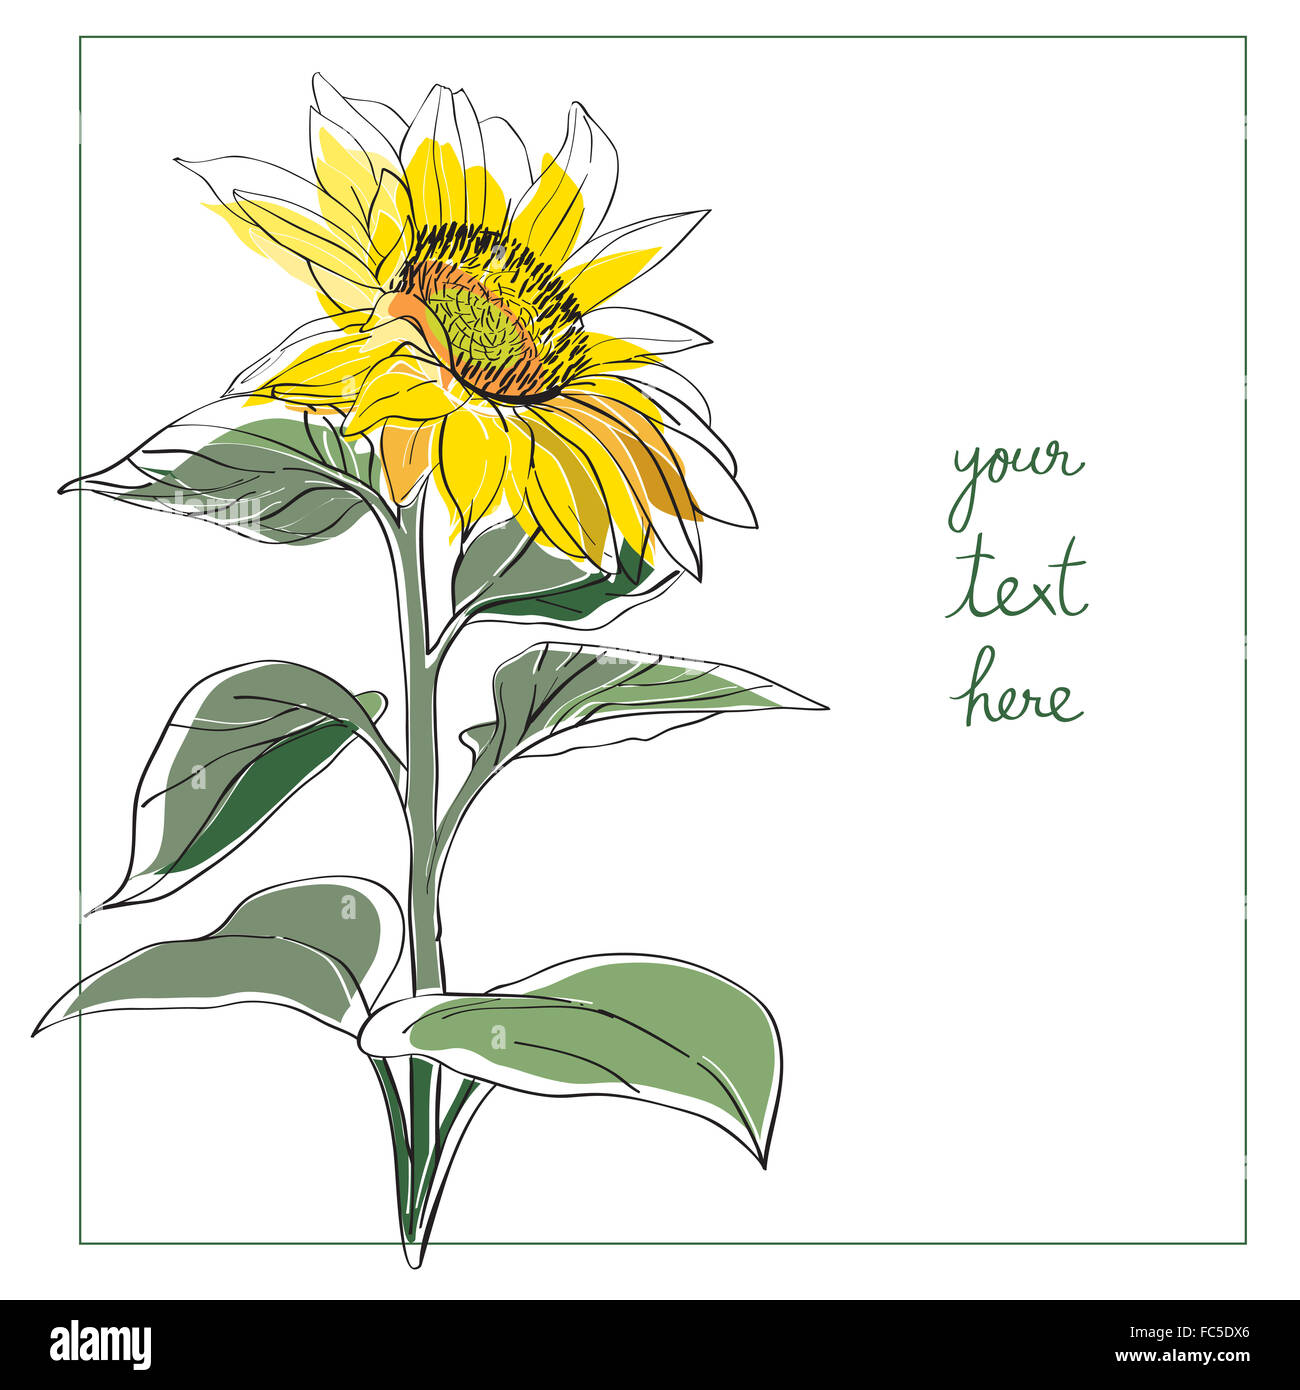 sunflower minimal card Stock Photo - Alamy